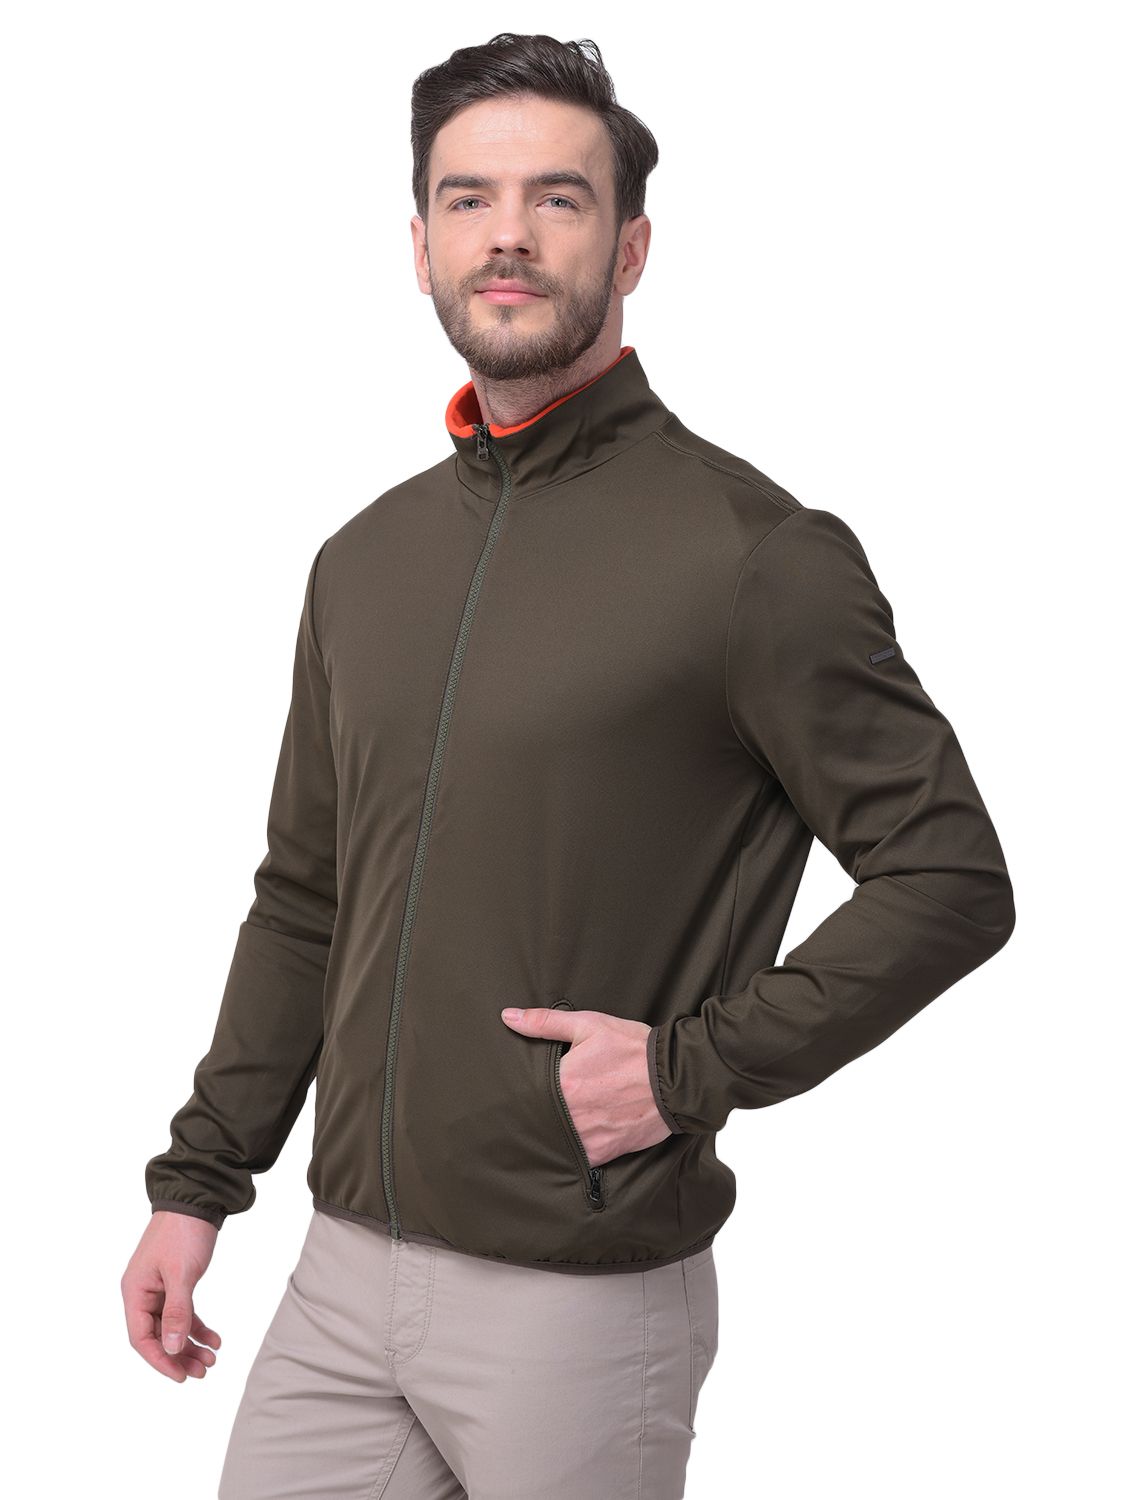 Olive long-sleeves lightweight jacket